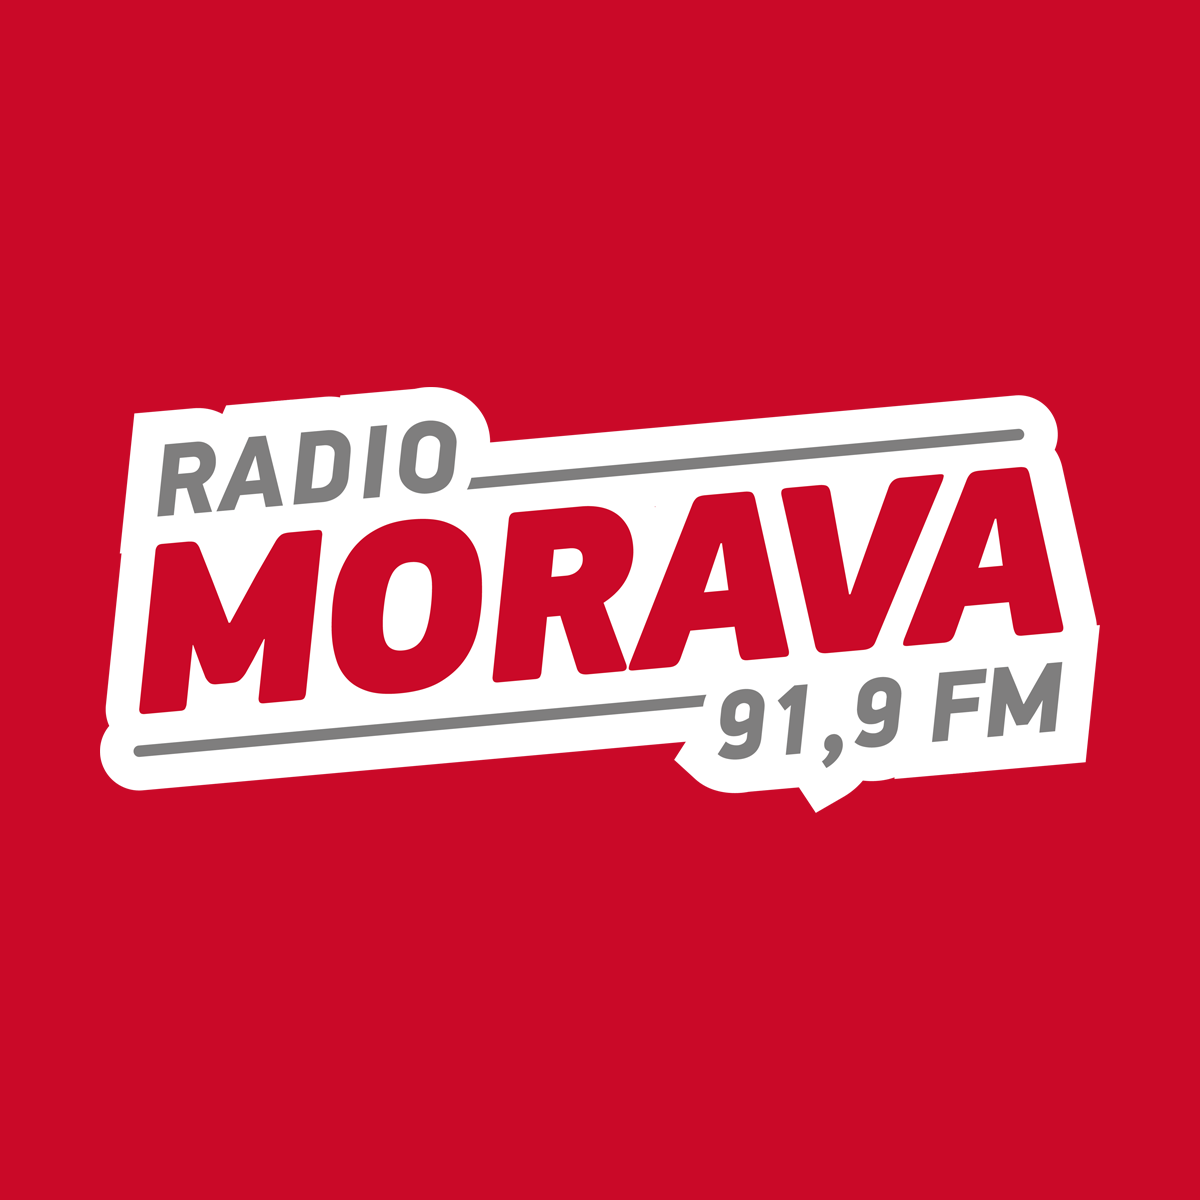 www.radiomorava.rs